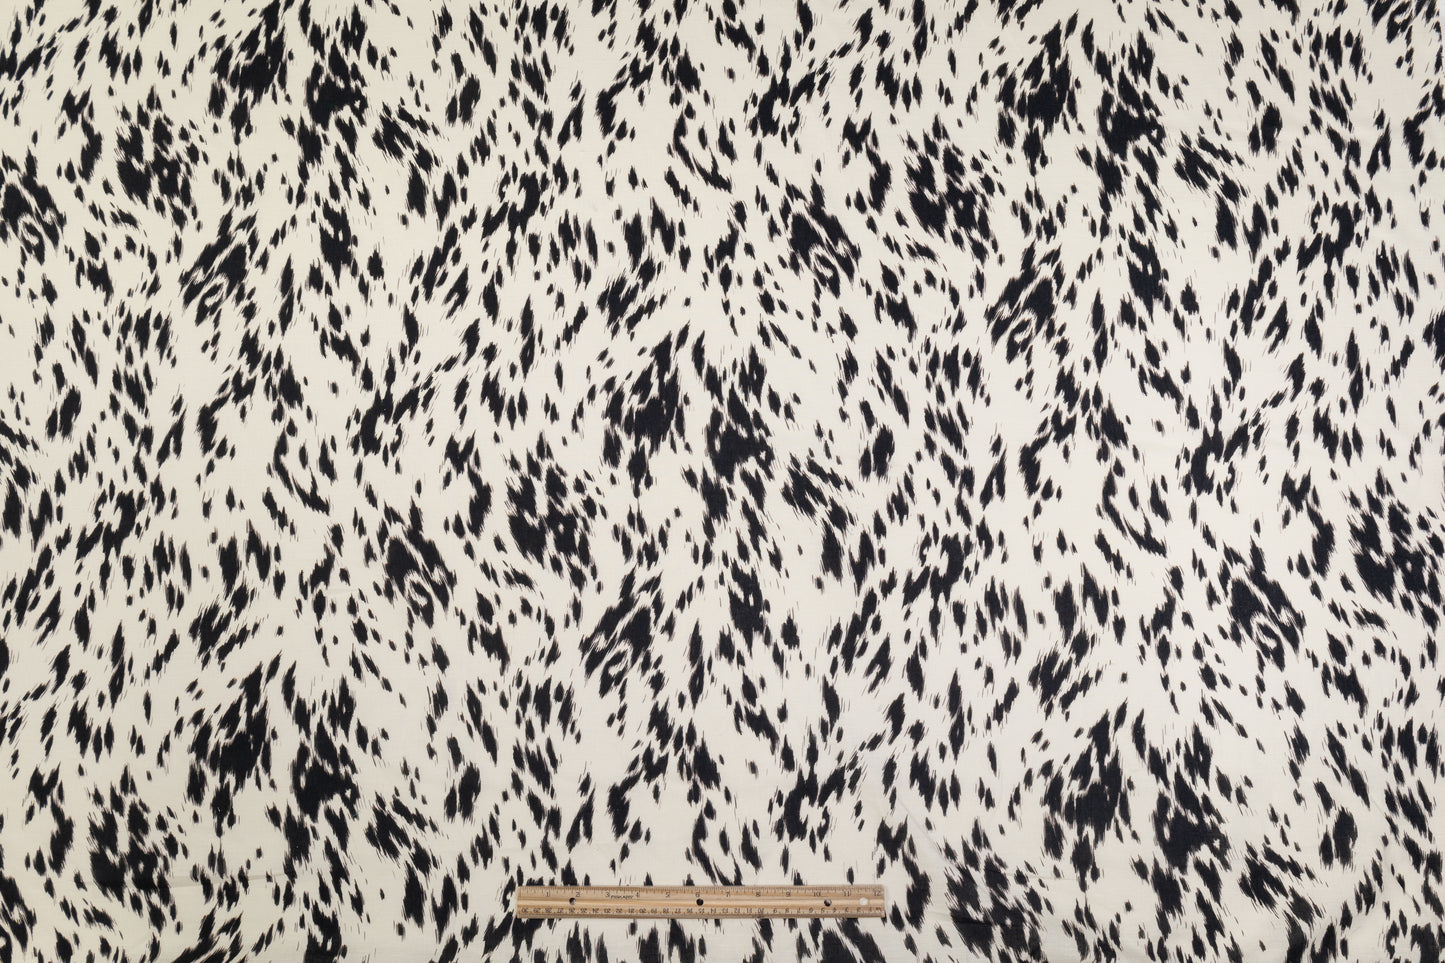 Abstract Printed Italian Linen - Beige / Black